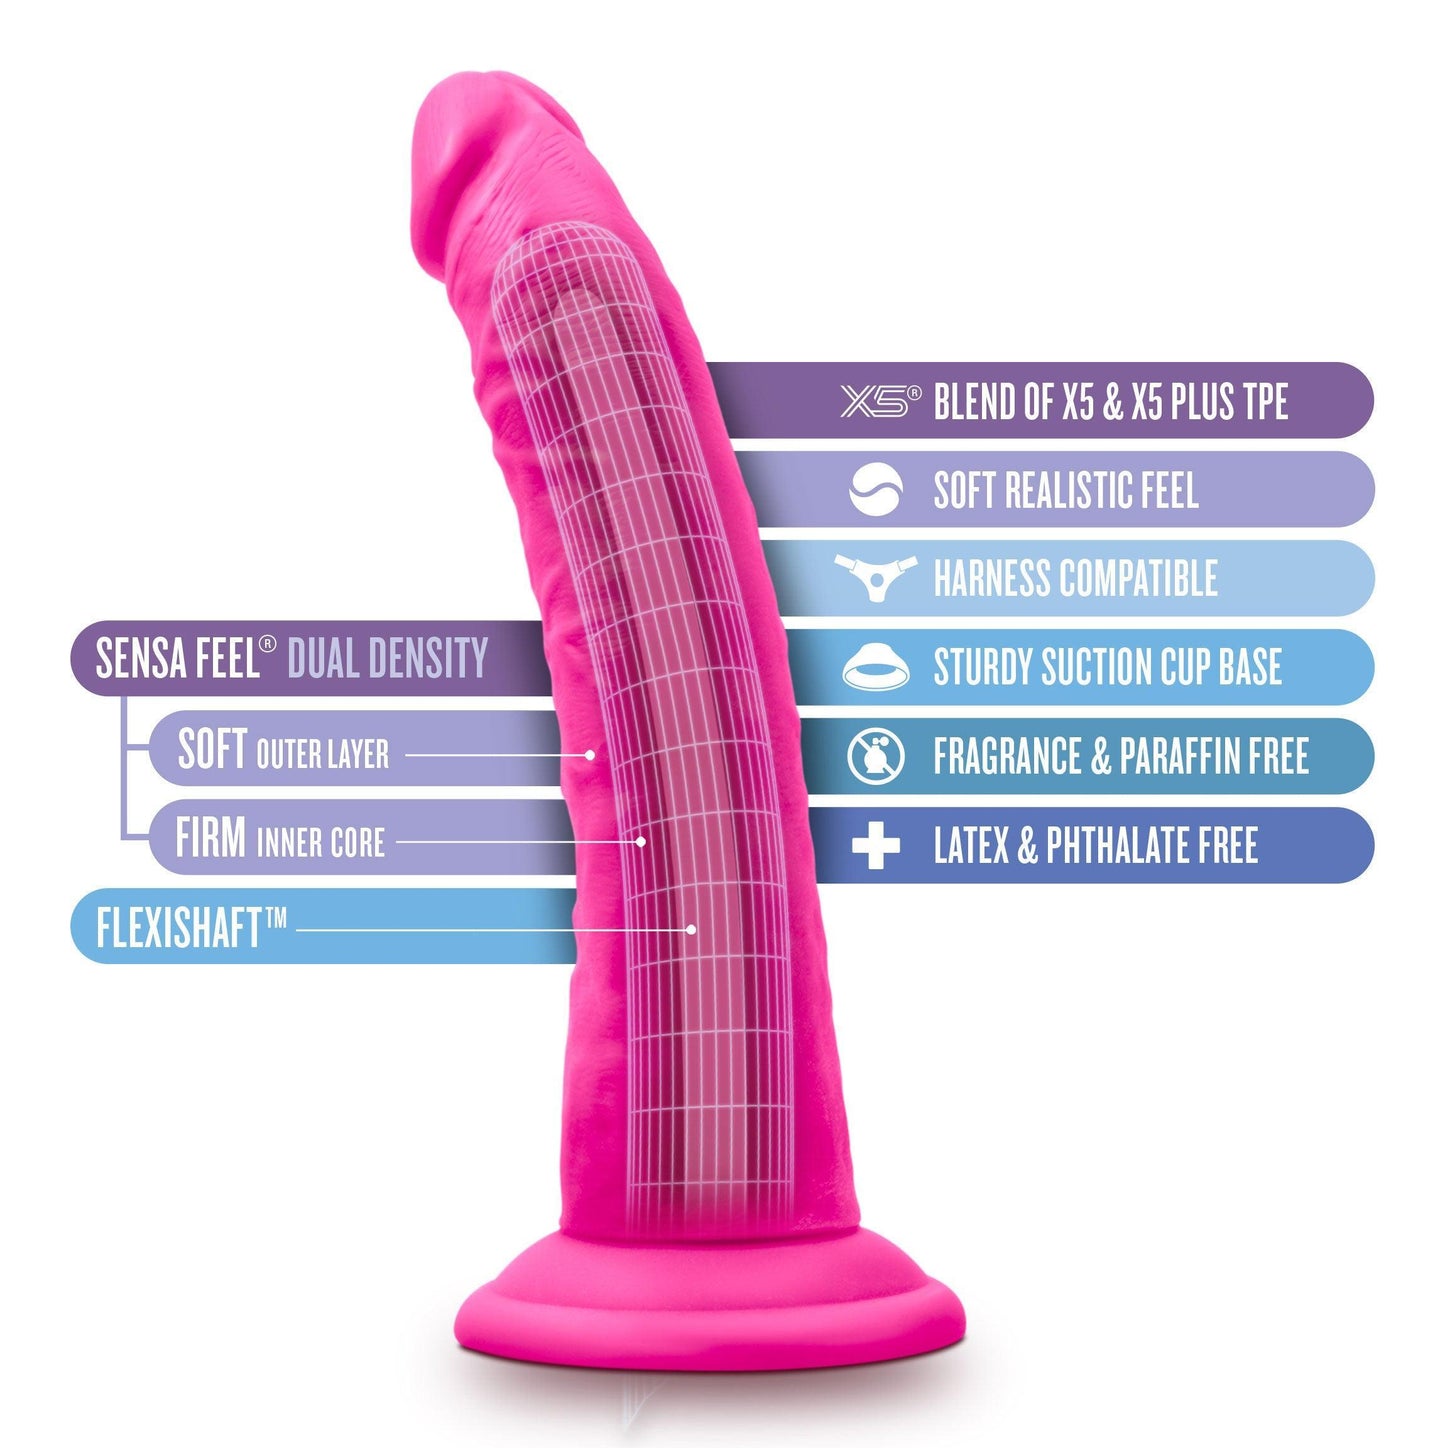 Au Naturel - Bold - Jack - 7 Inch Dildo - Pink - My Sex Toy Hub